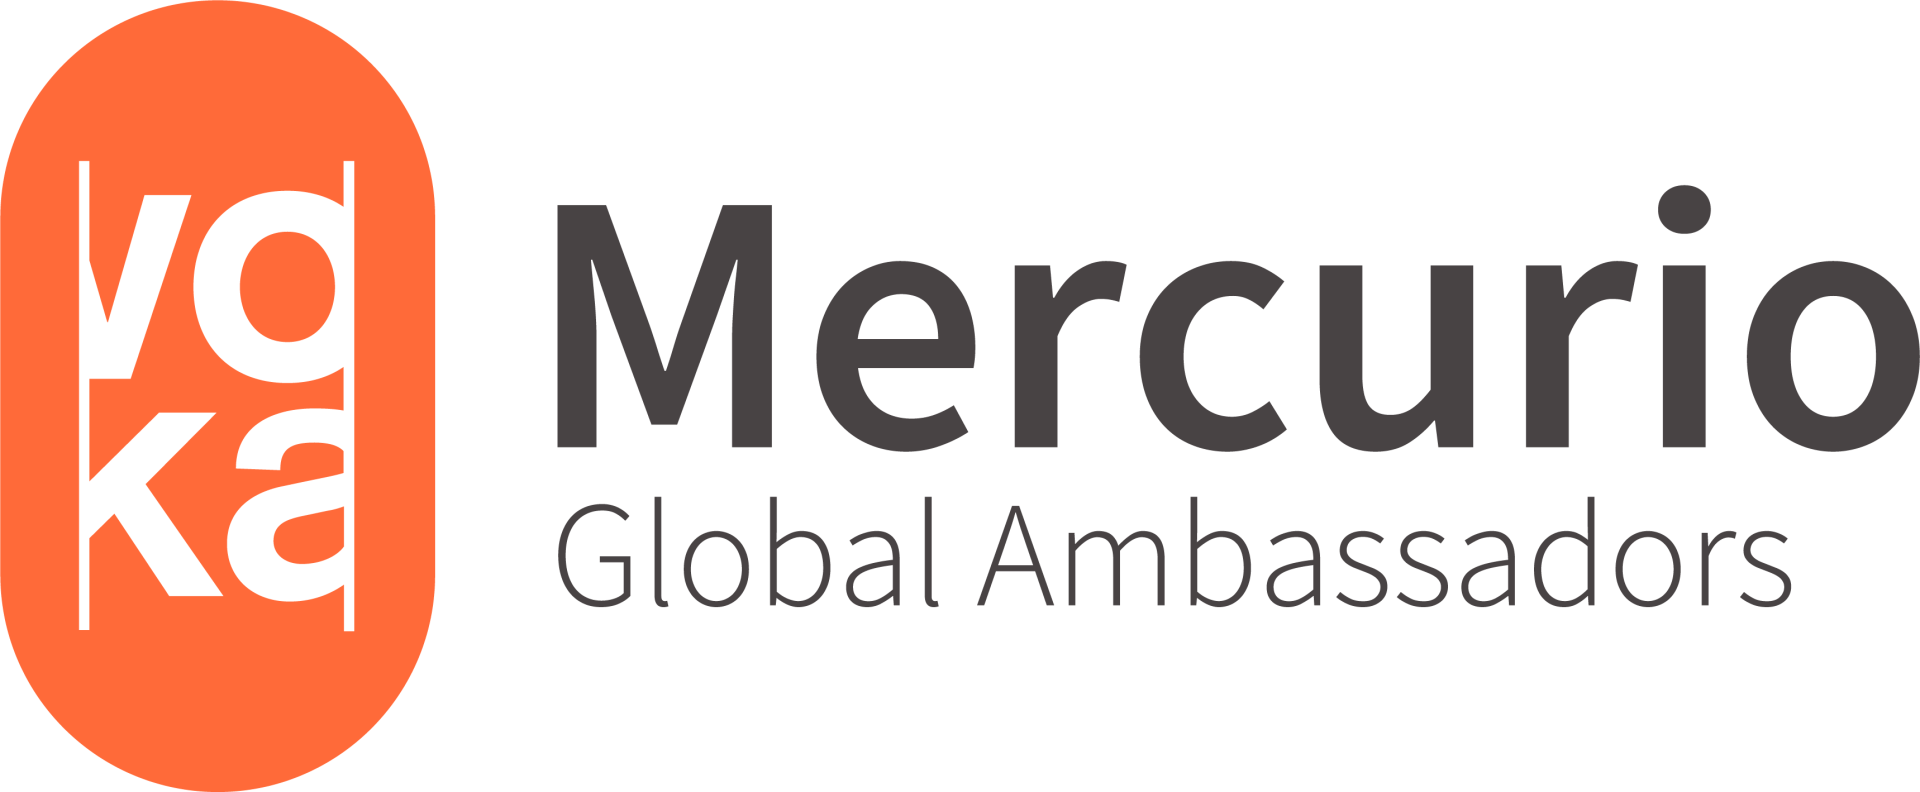 Mercurio Global Ambassadors